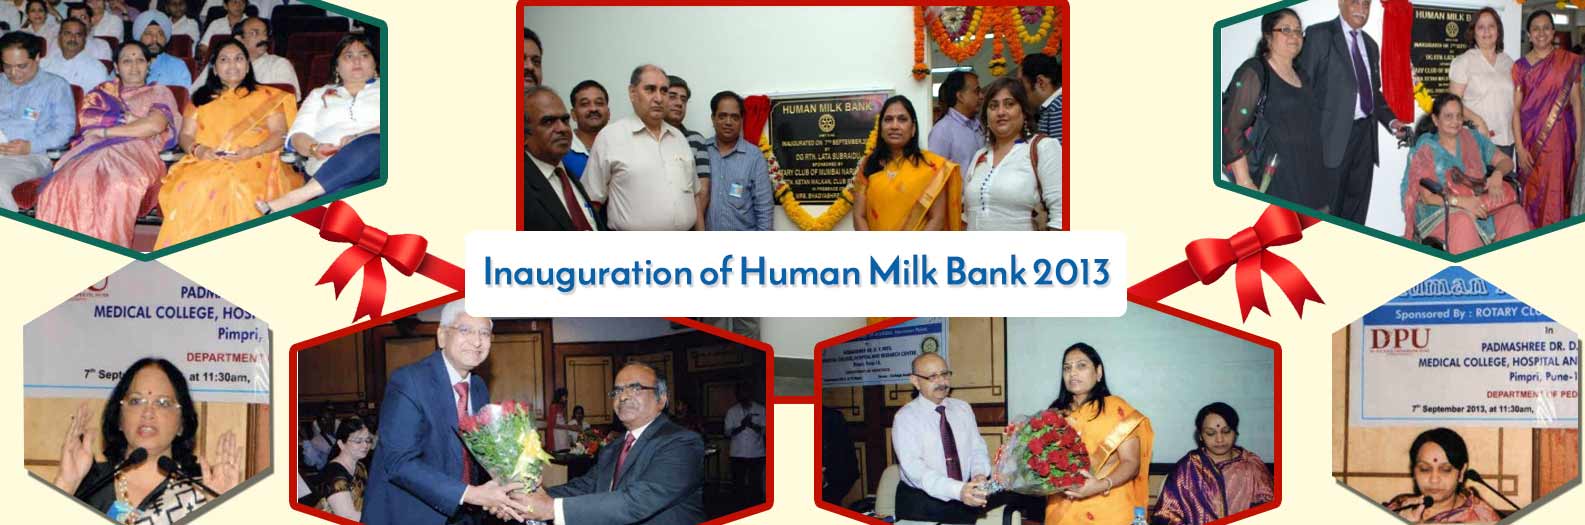 Human Milk Bank